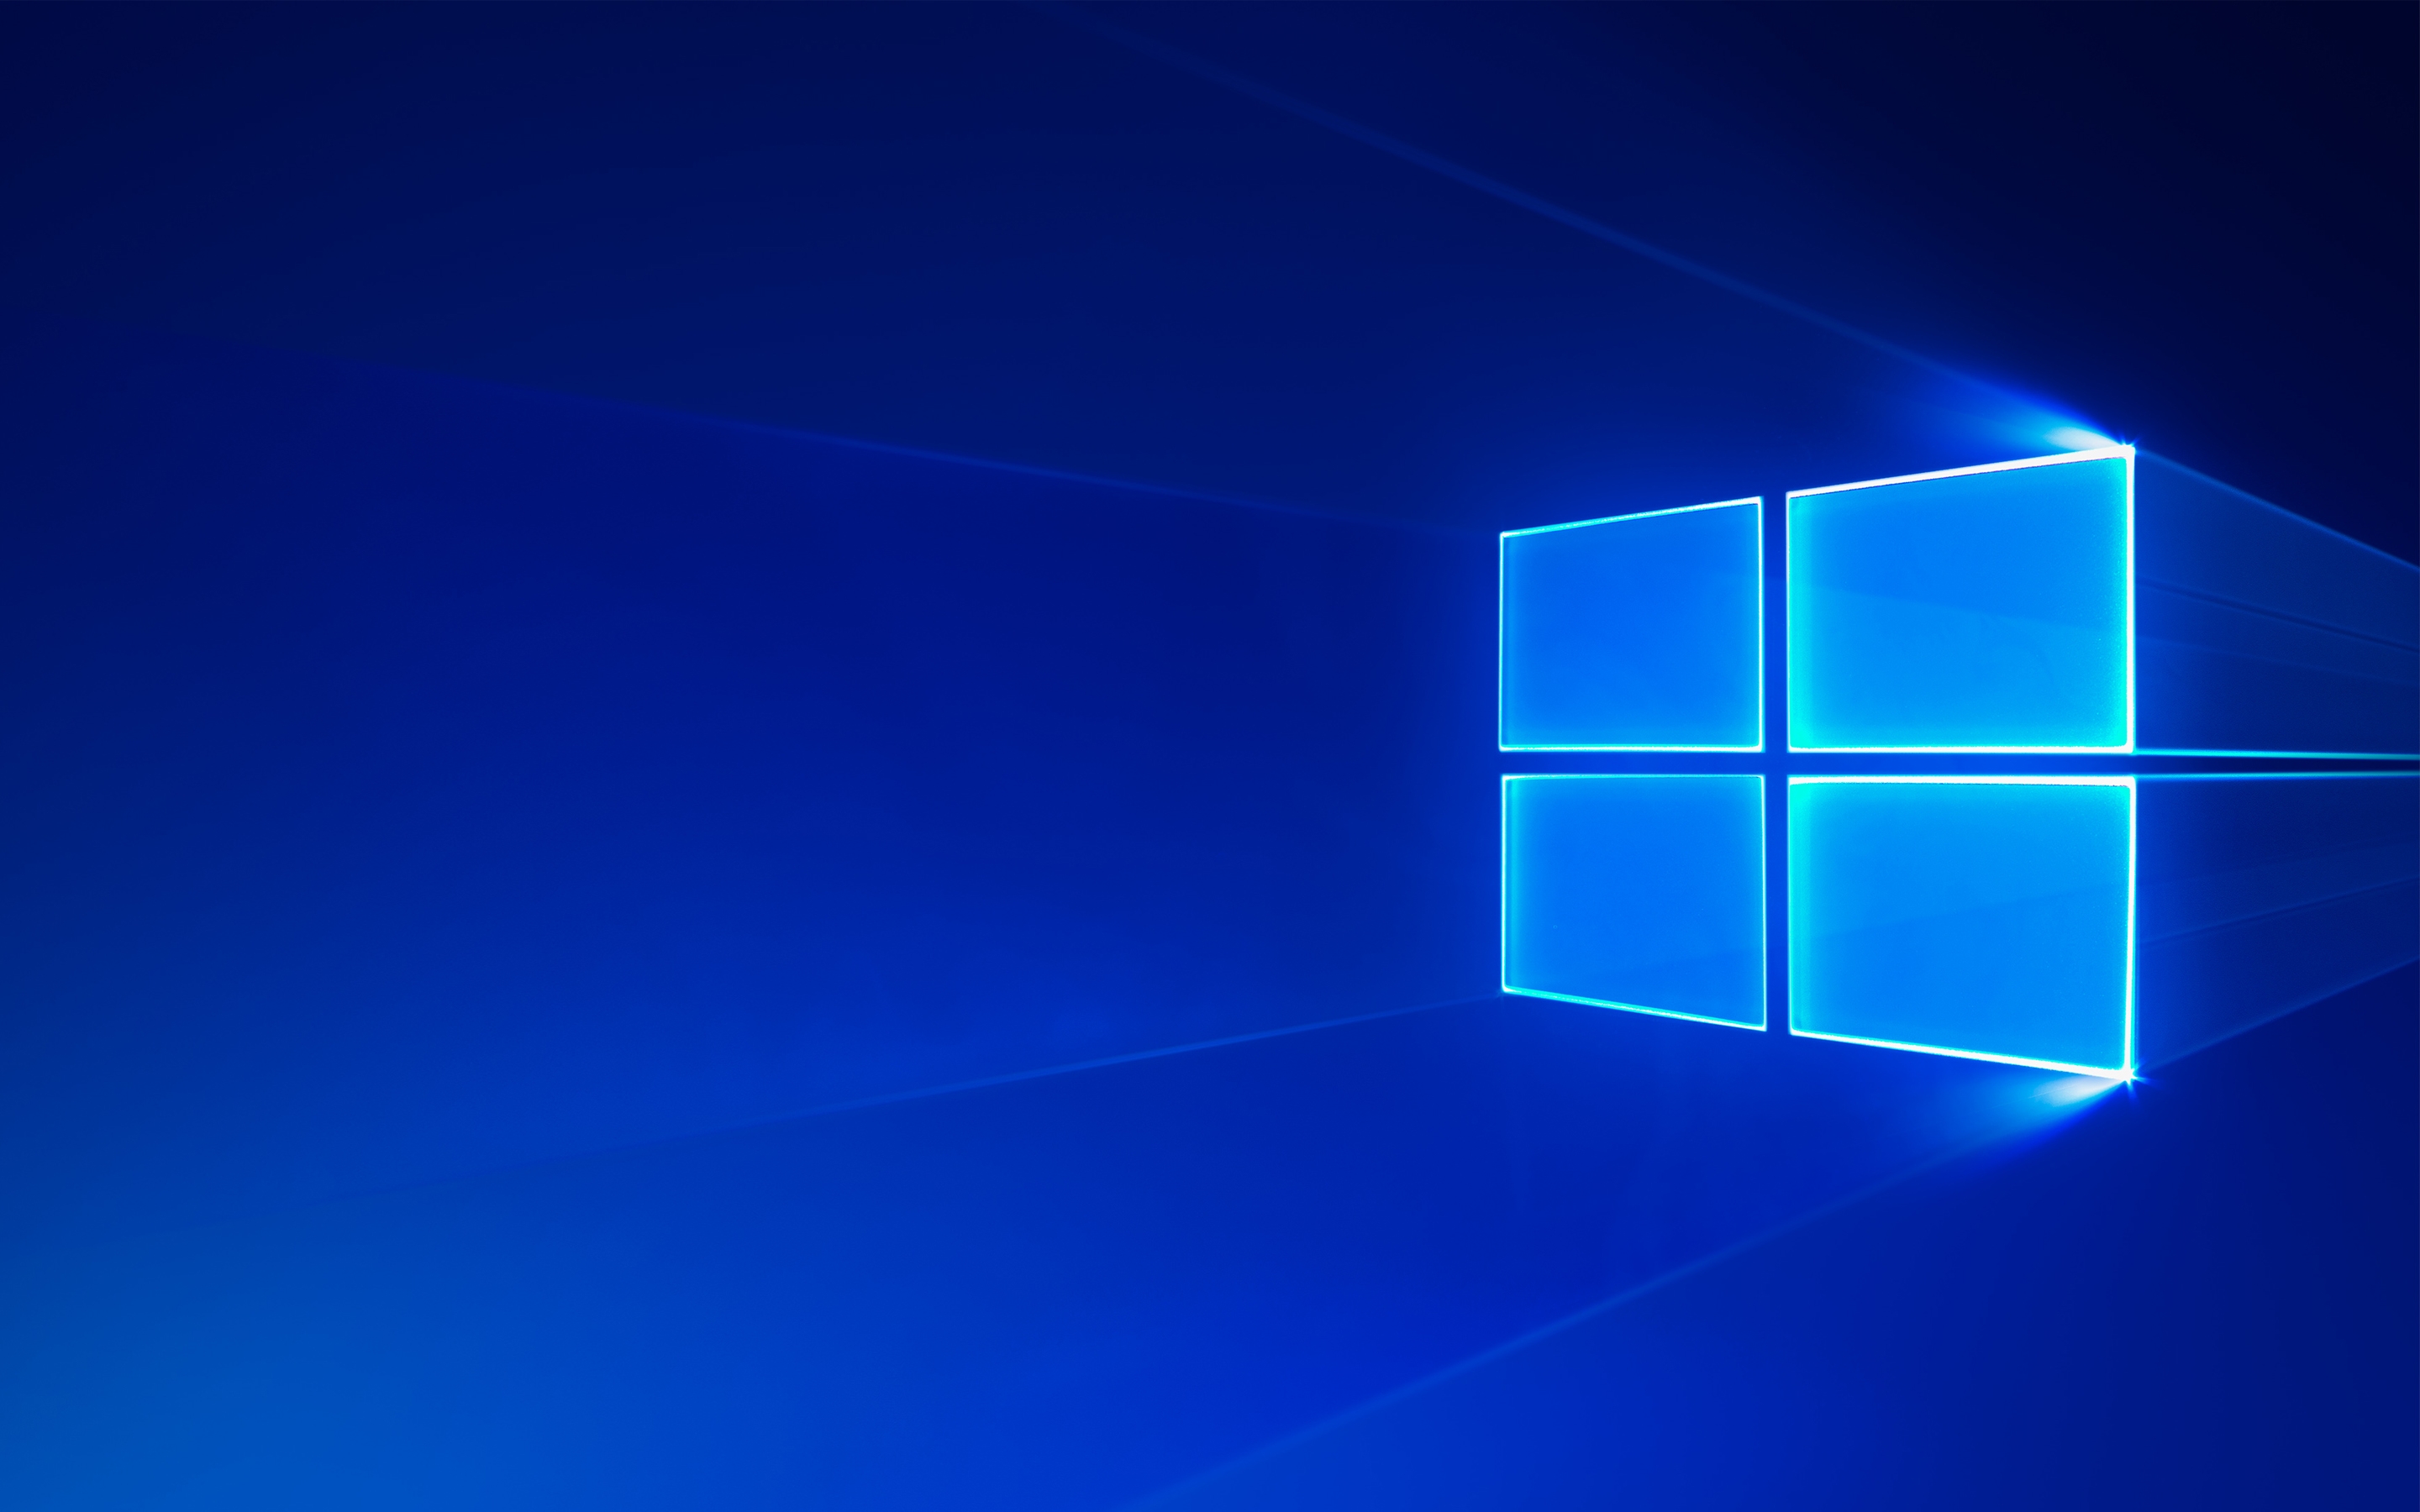 Free photo Stock photo of Windows 10 screensaver in blue